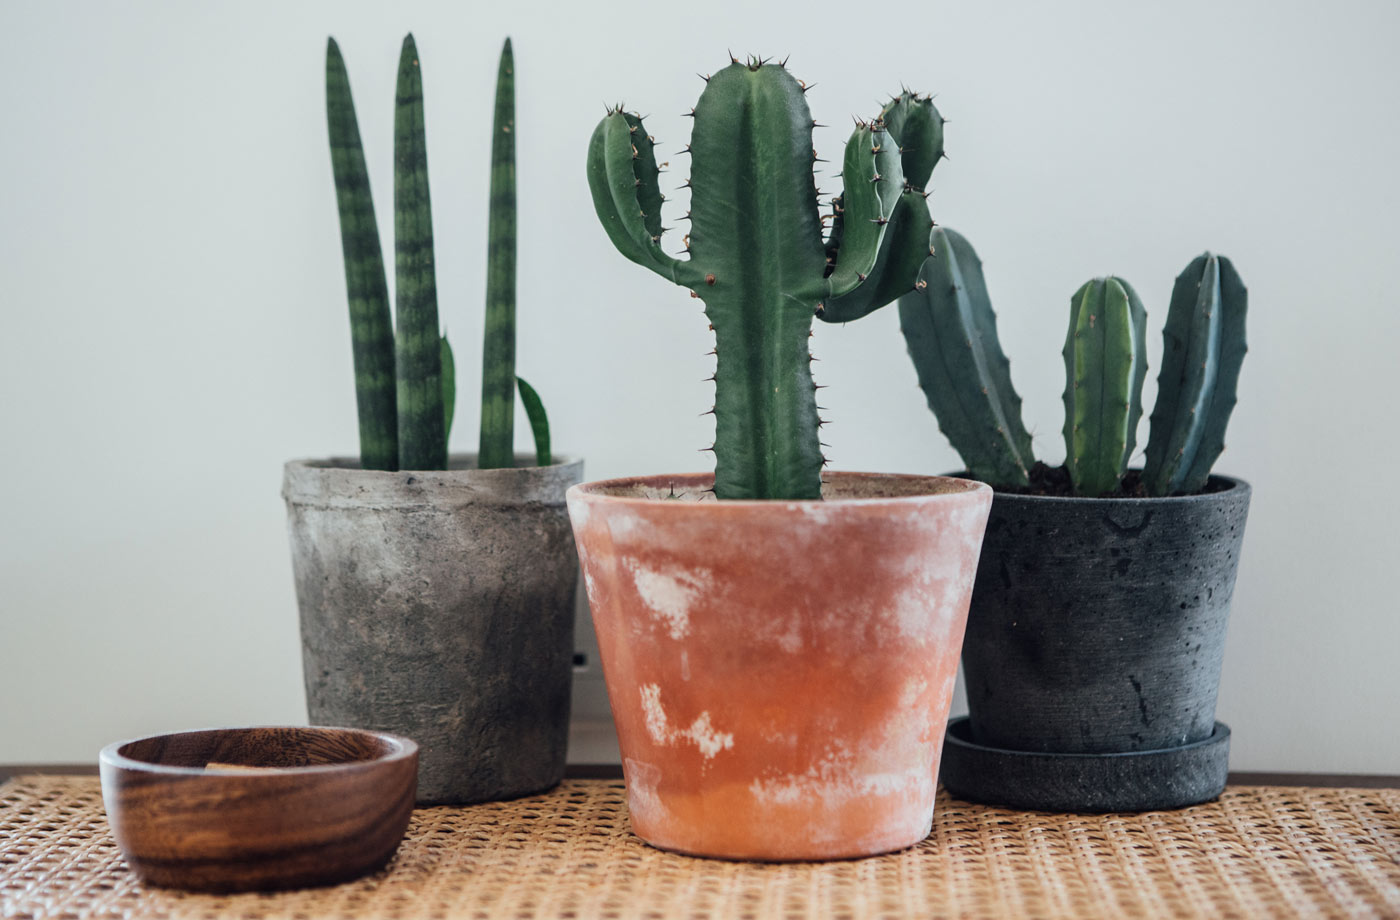 three cactus plants in pots